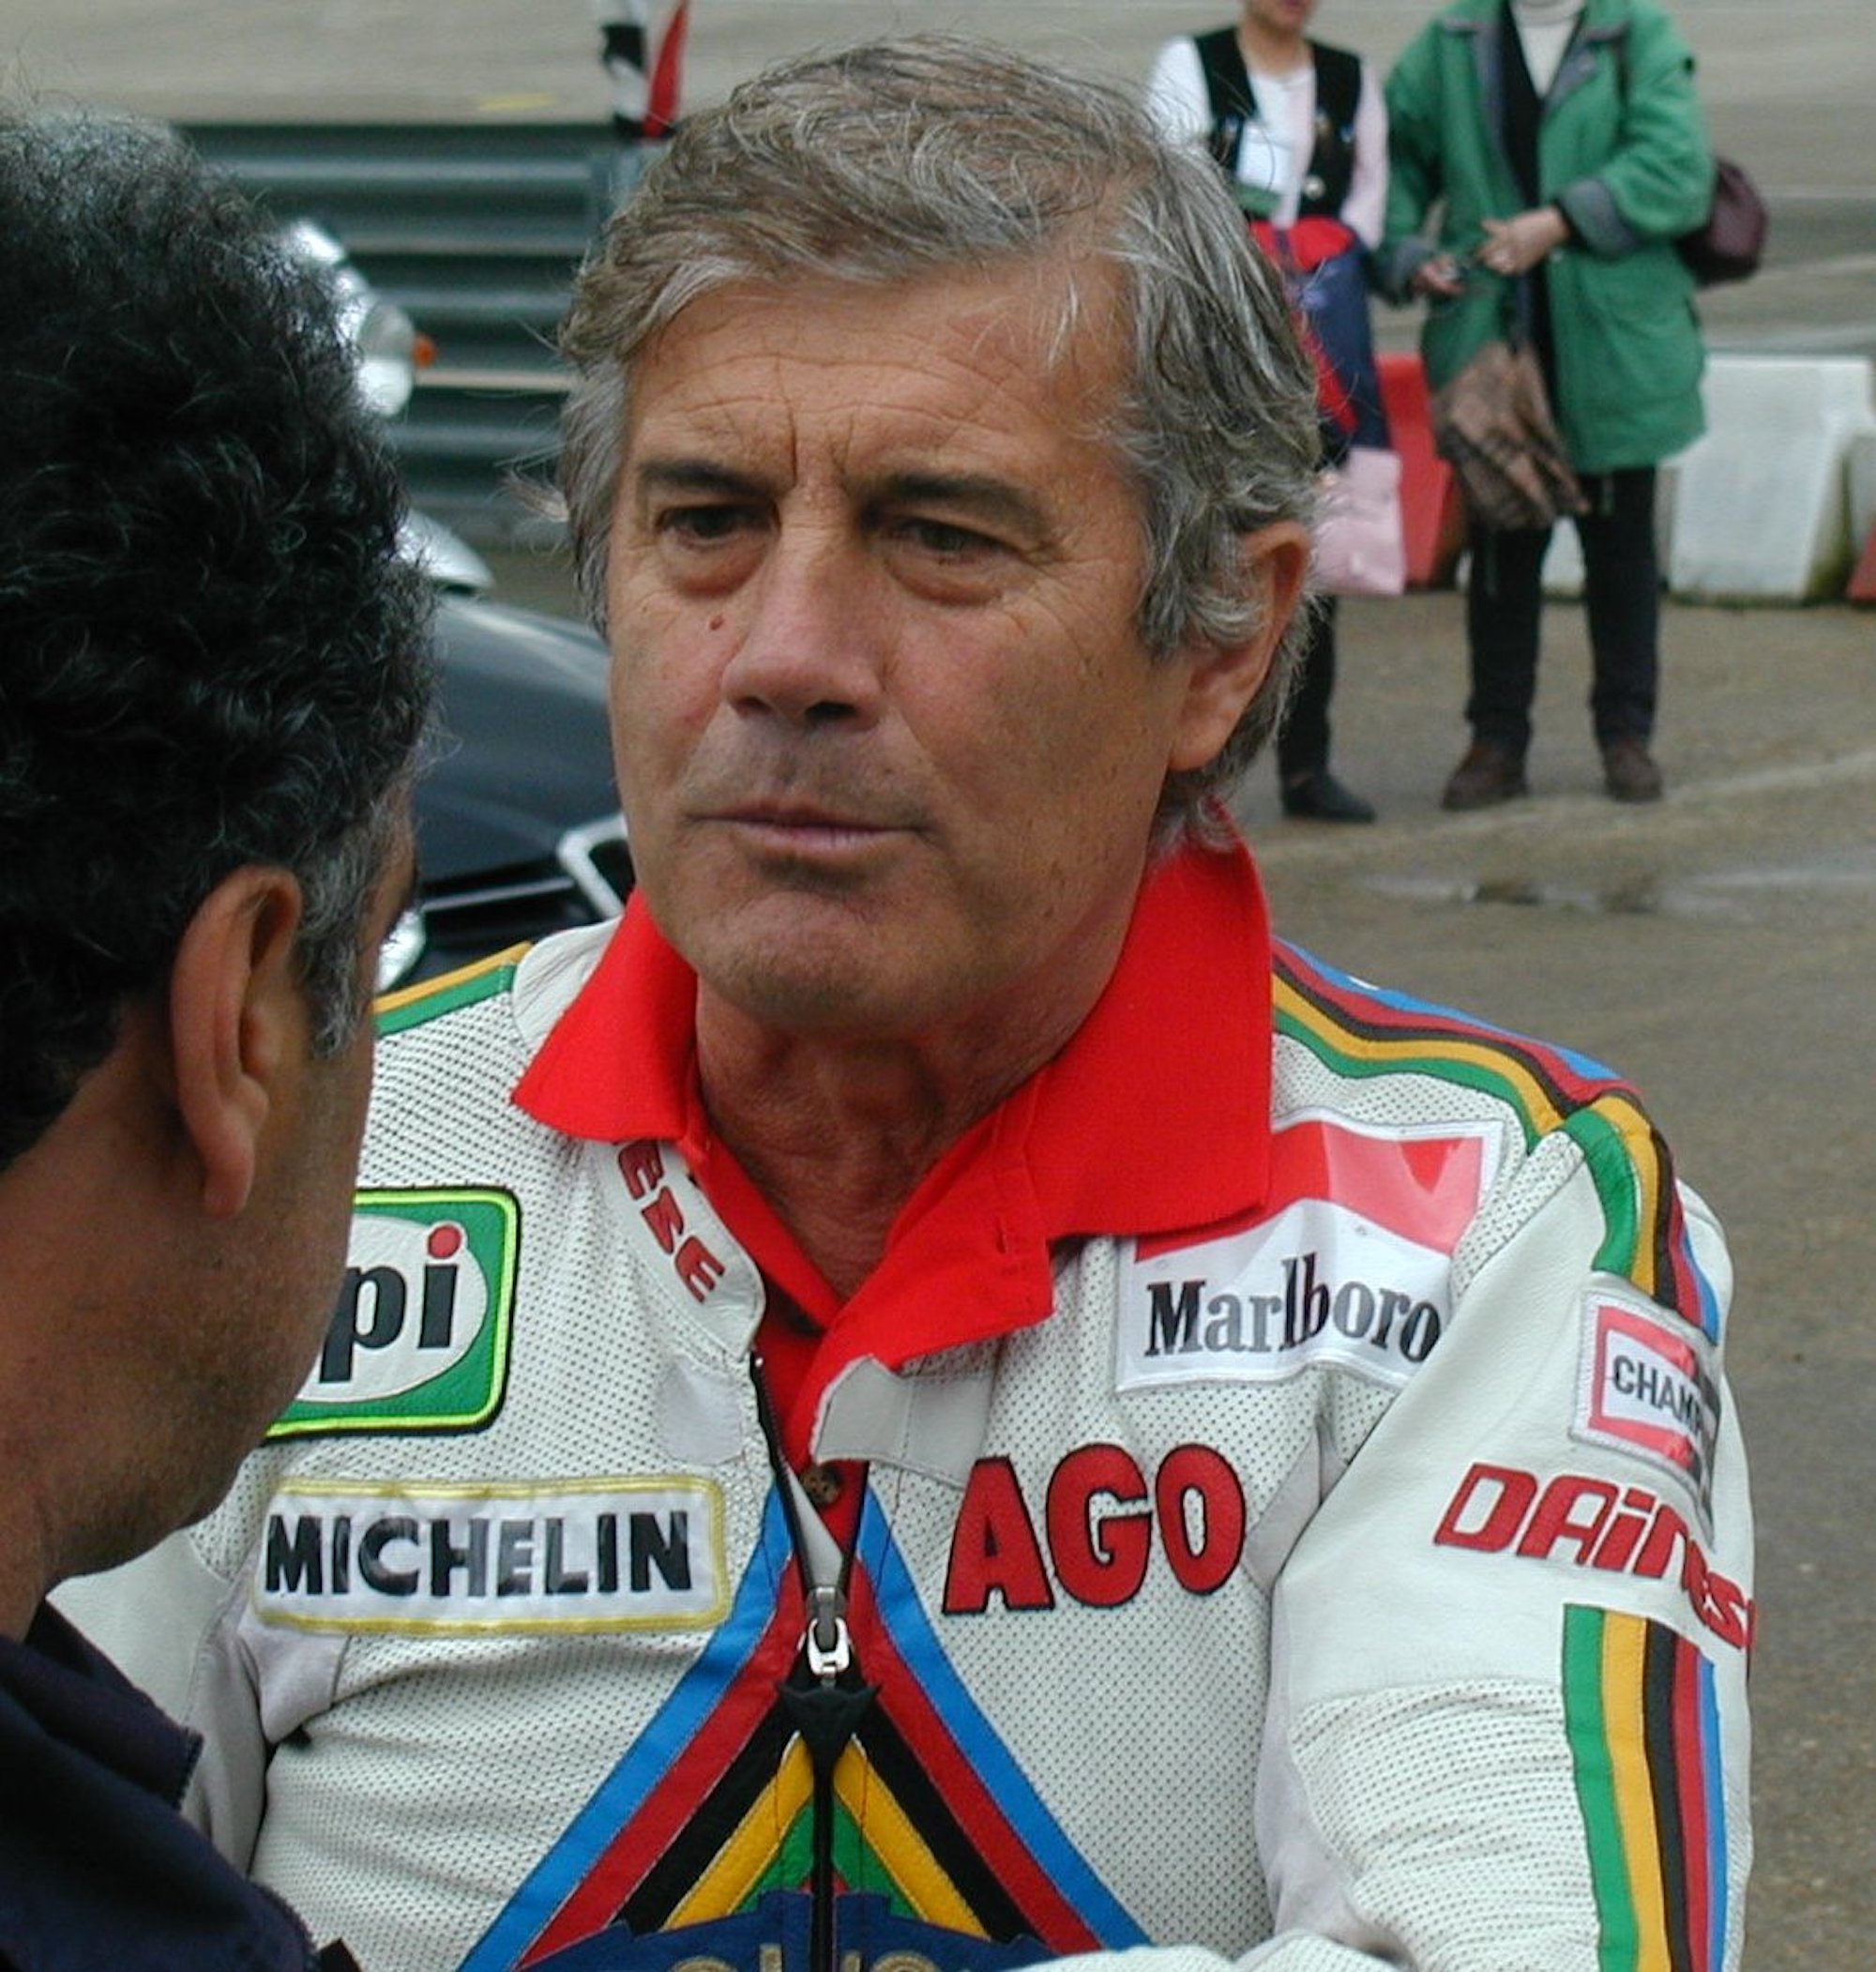 Giacomo Agostini. Media sourced from Wikipedia.